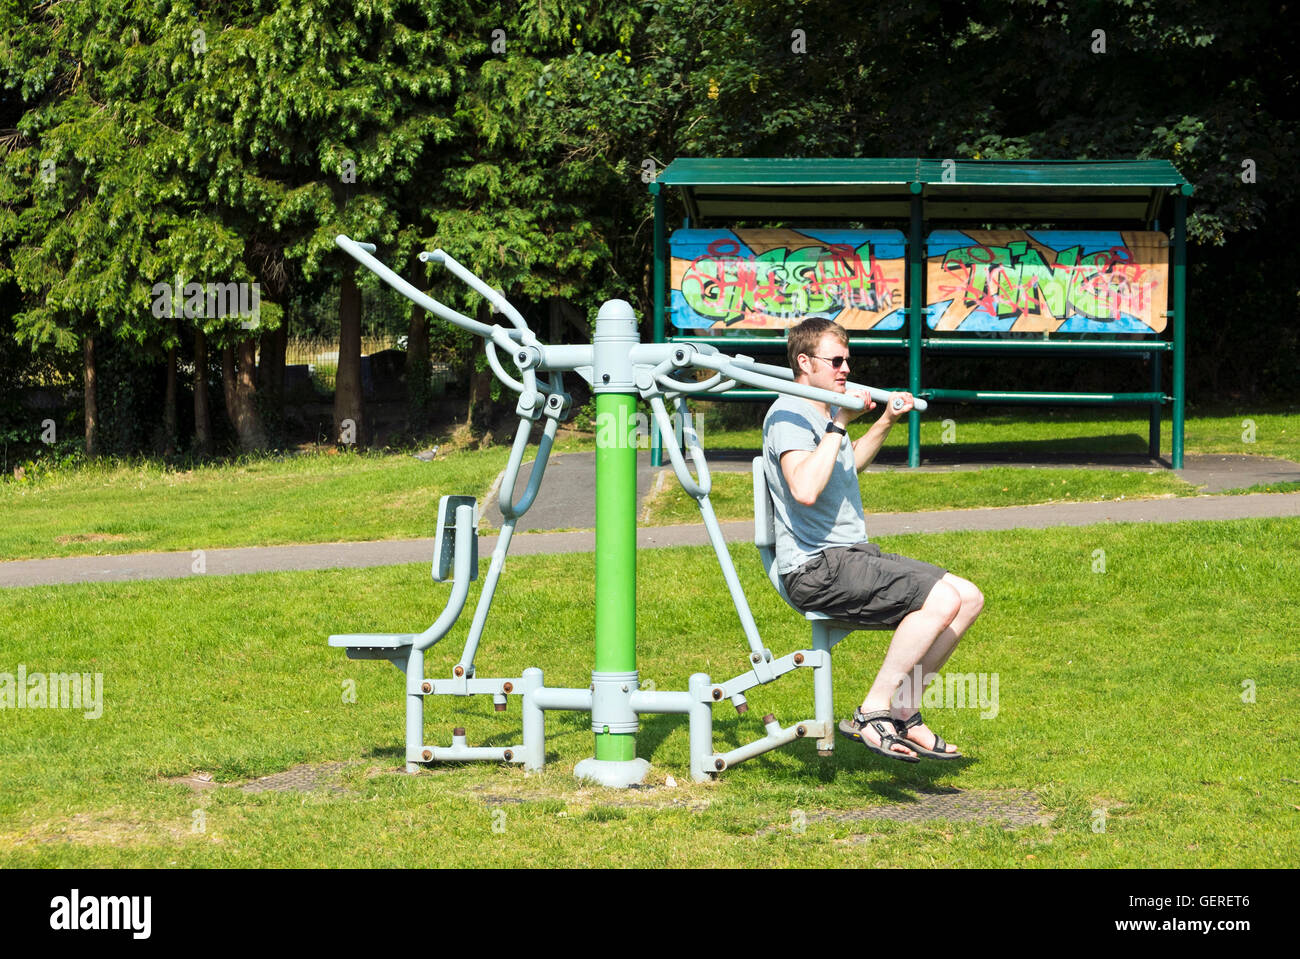 Mann mit Outdoor-Sportgeräte in Kingswood Park, Bristol, UK Stockfotografie  - Alamy